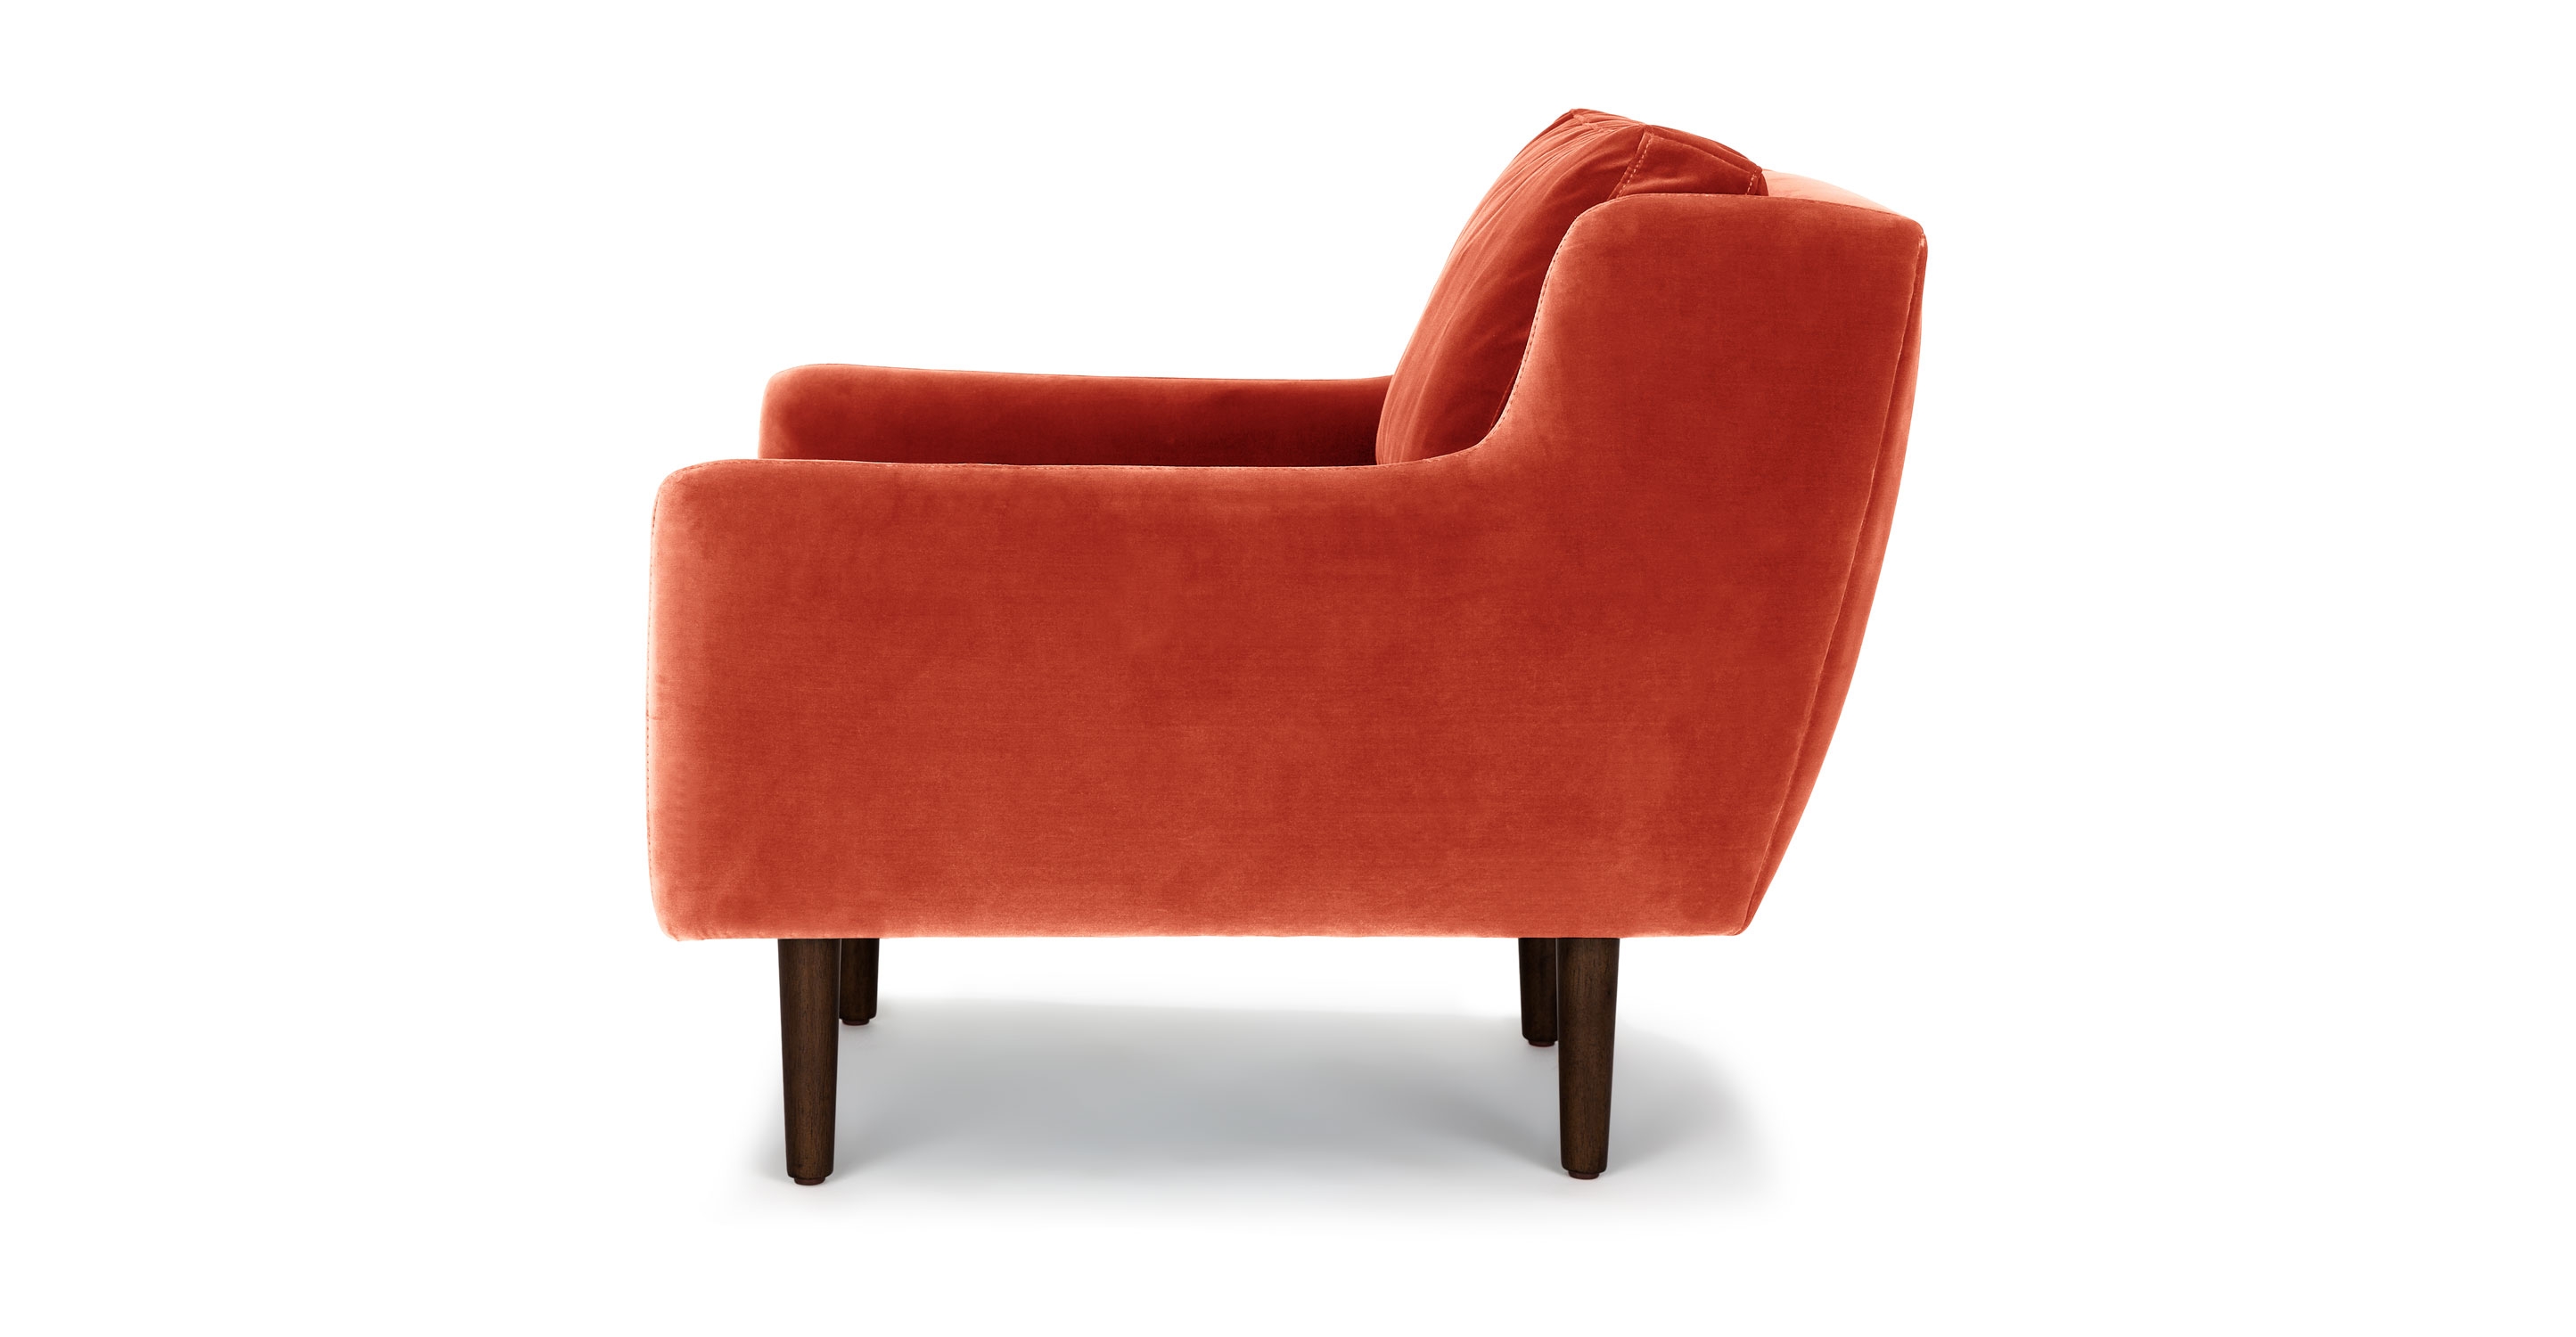 Matrix Persimmon Orange Chair - Image 2